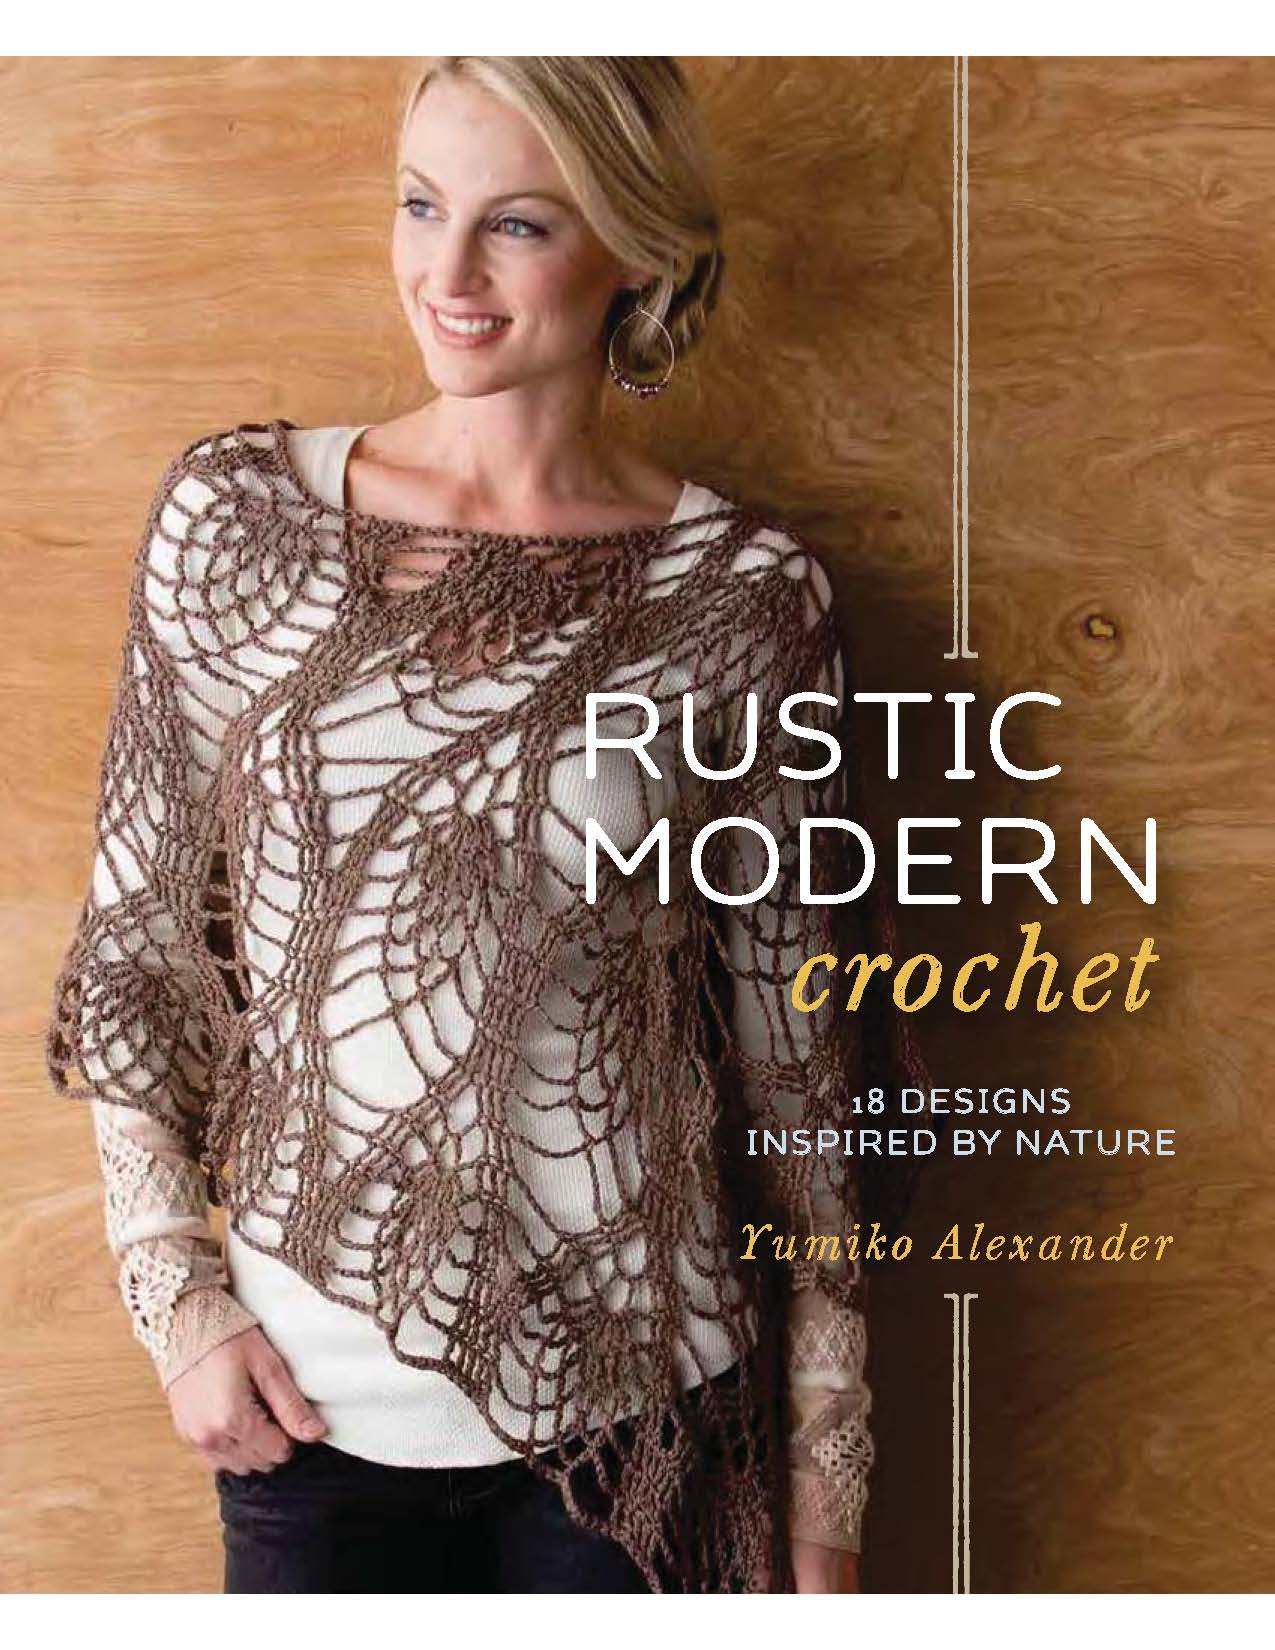 Rustic Modern Crochet 